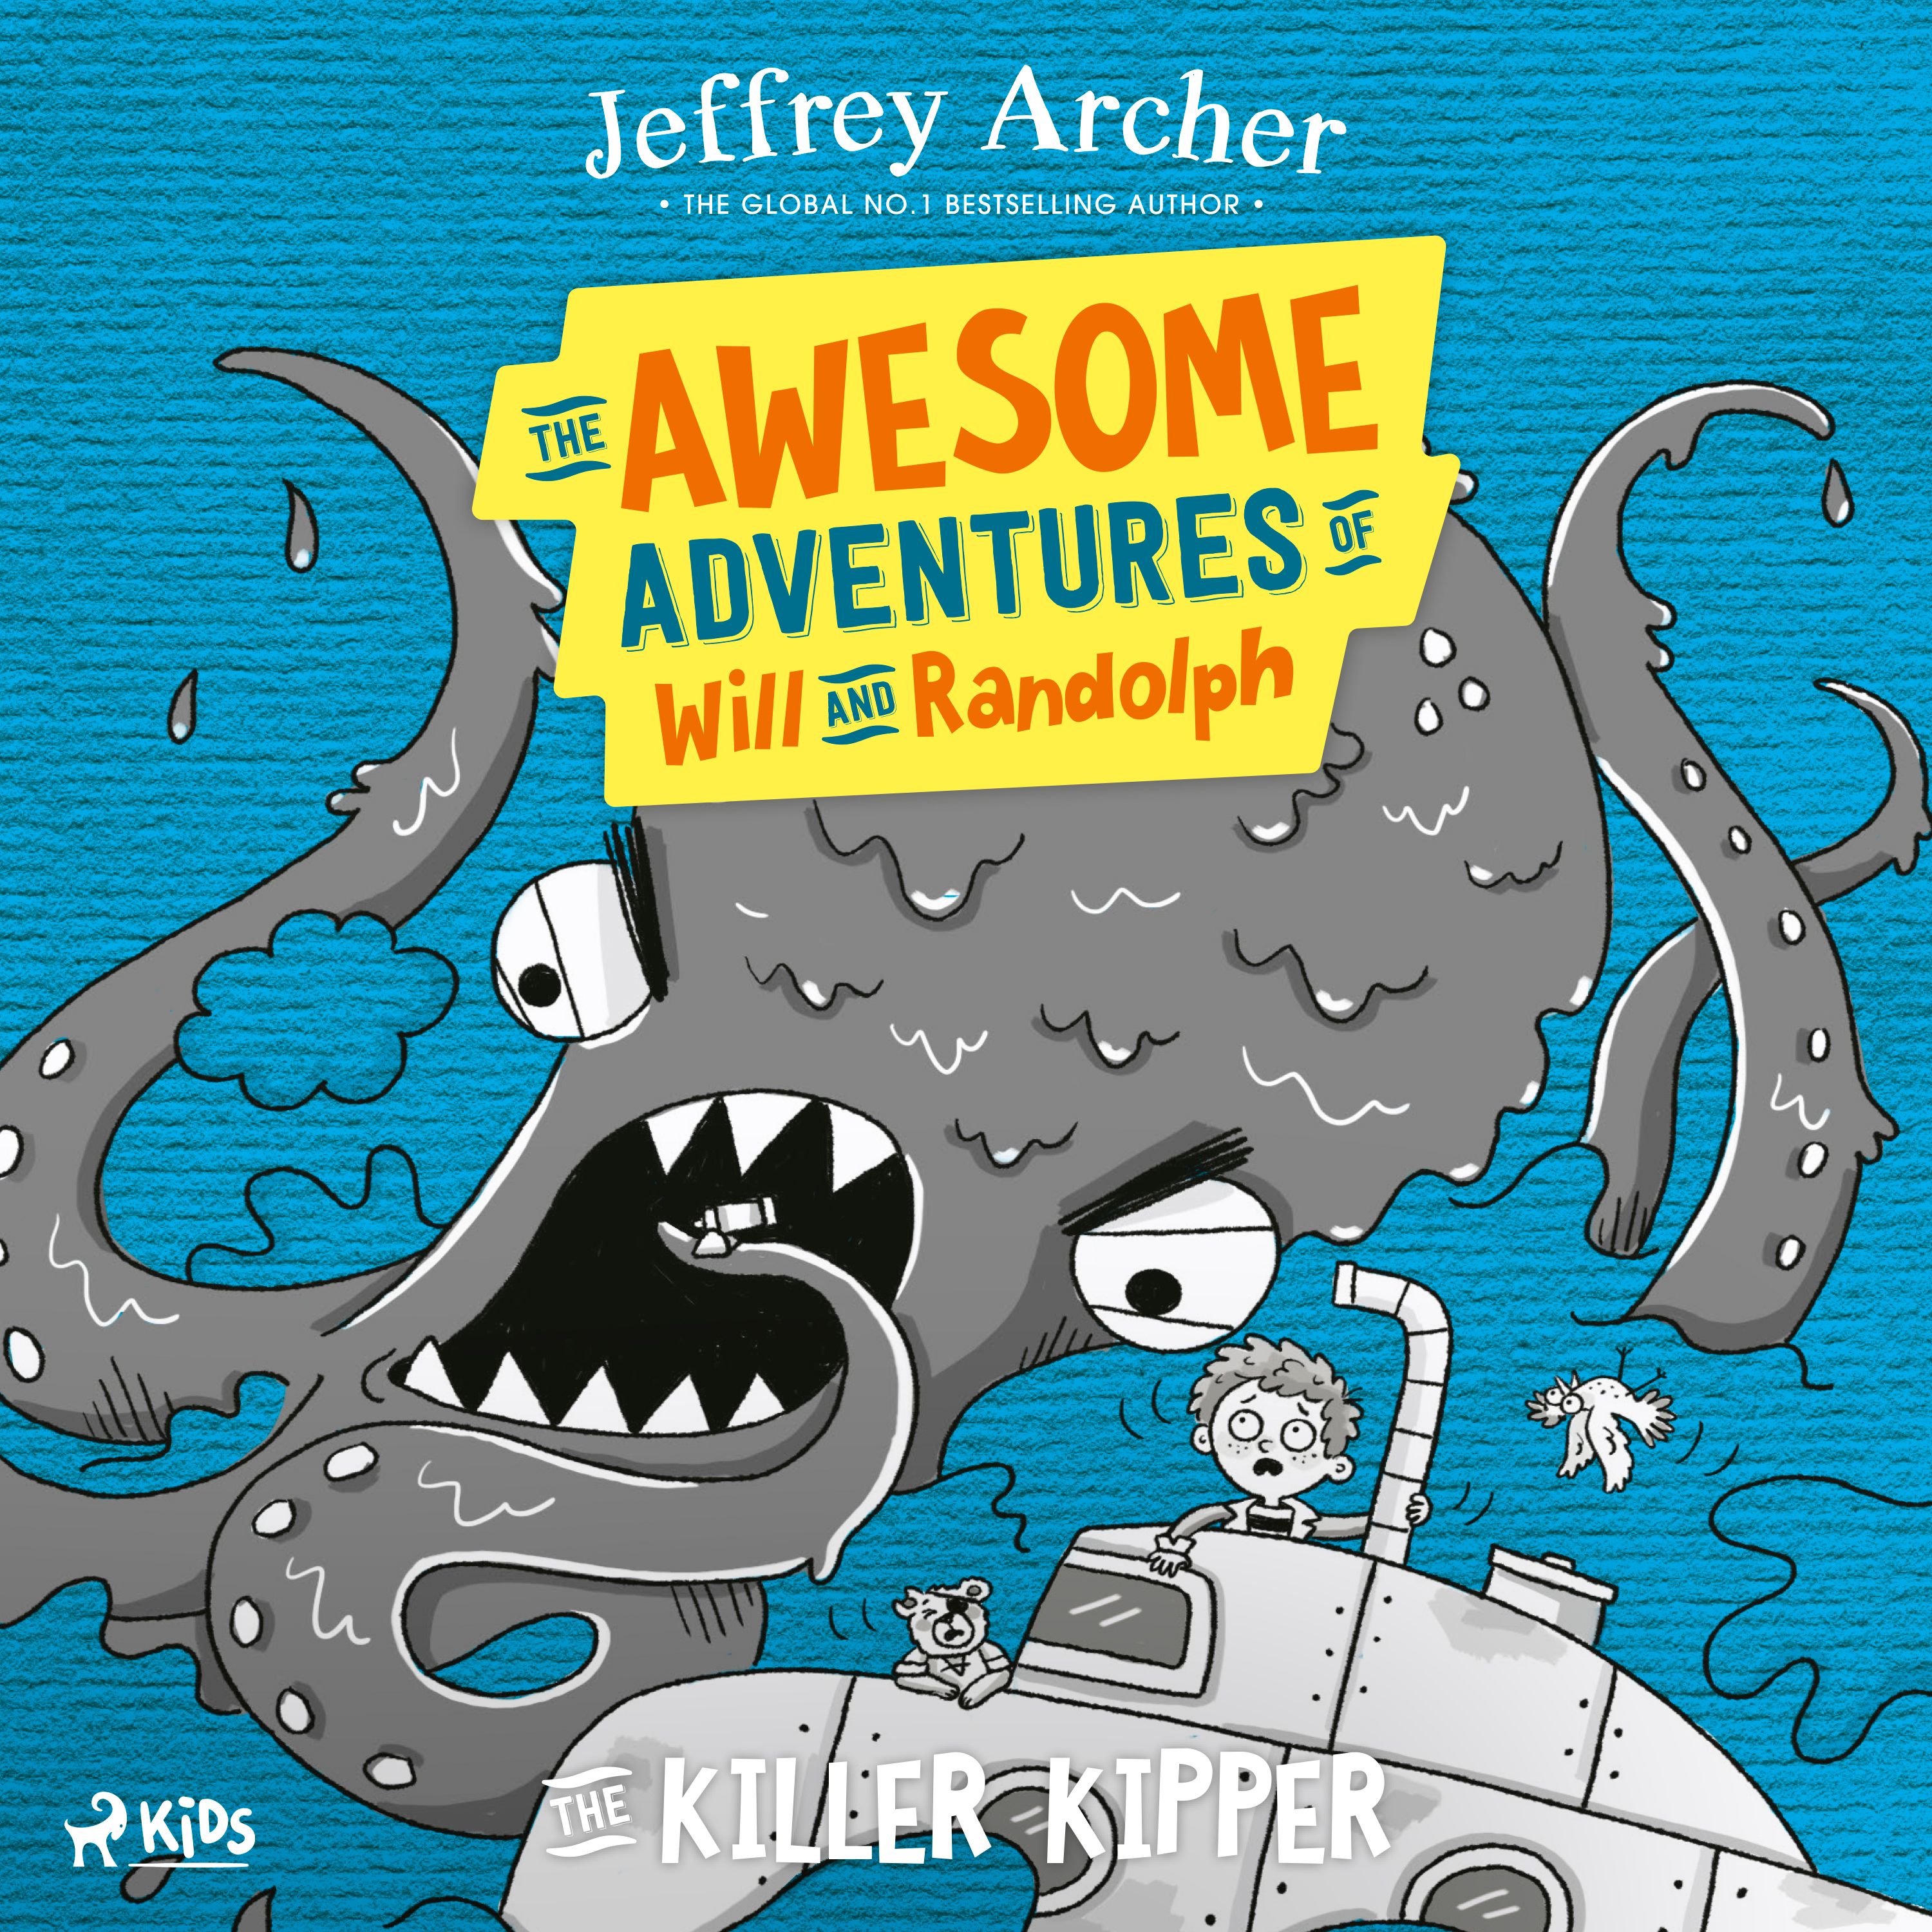 The Awesome Adventures of Will and Randolph: The Killer Kipper, ljudbok av Jeffrey Archer